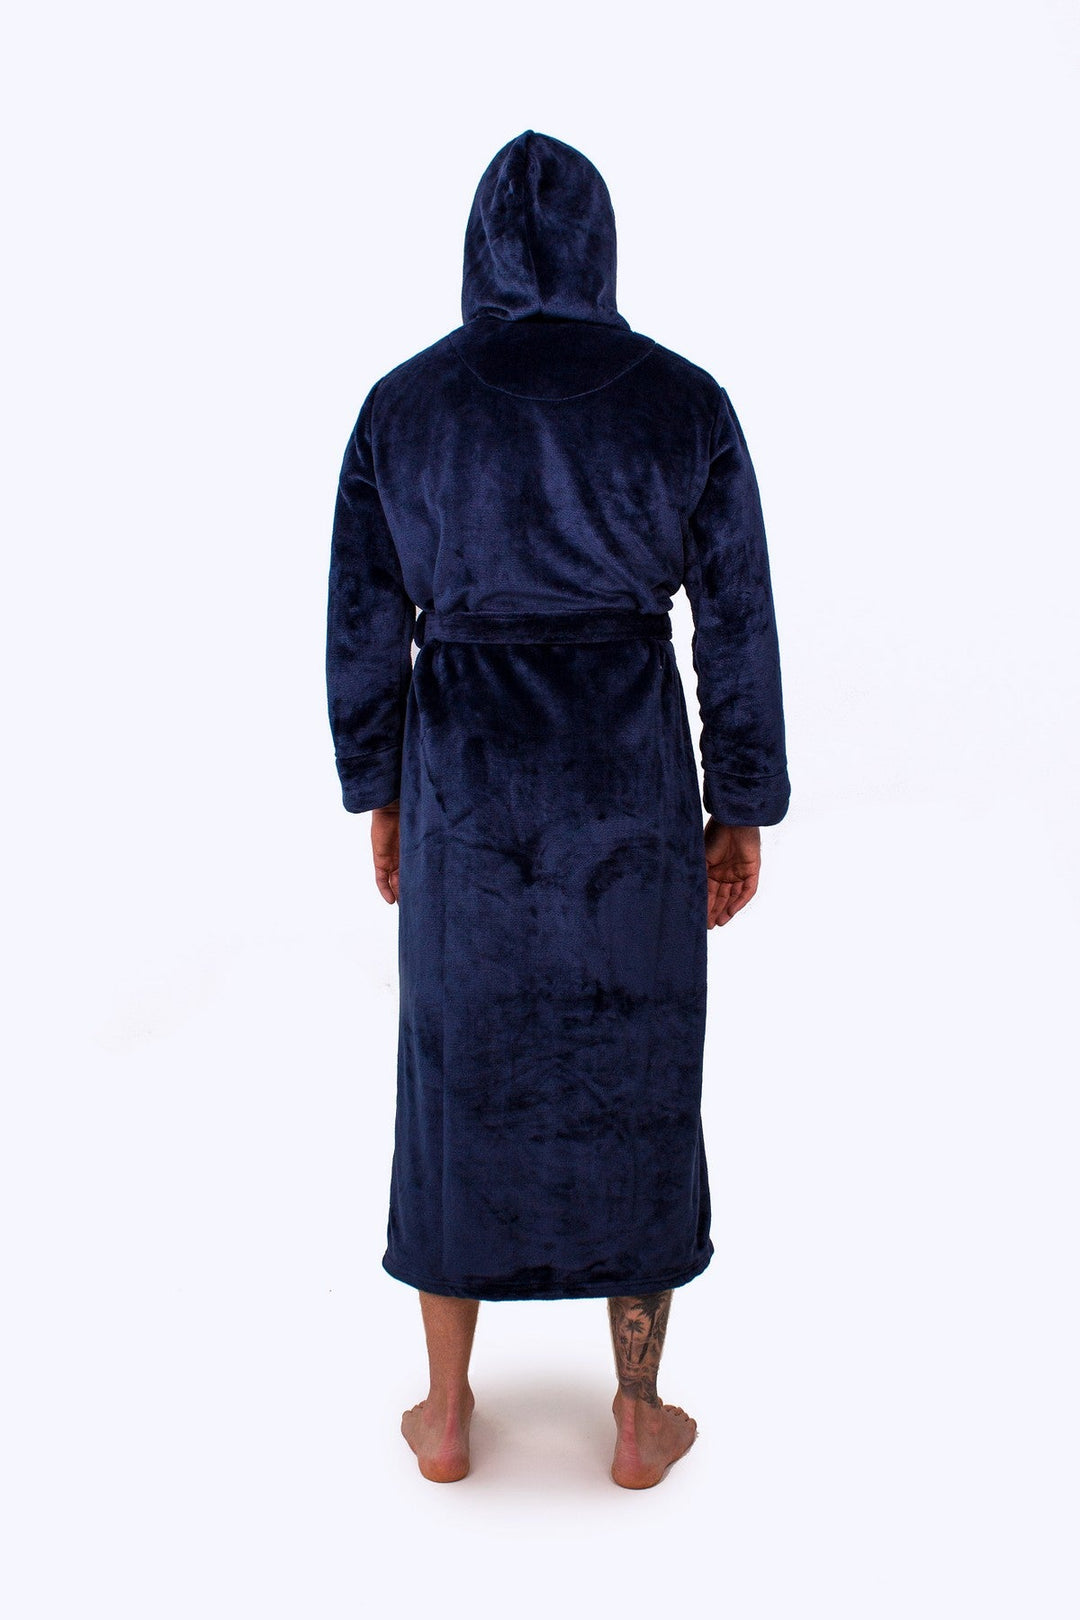 Groom Custom Hooded Long Bathrobes - custom bathrobes